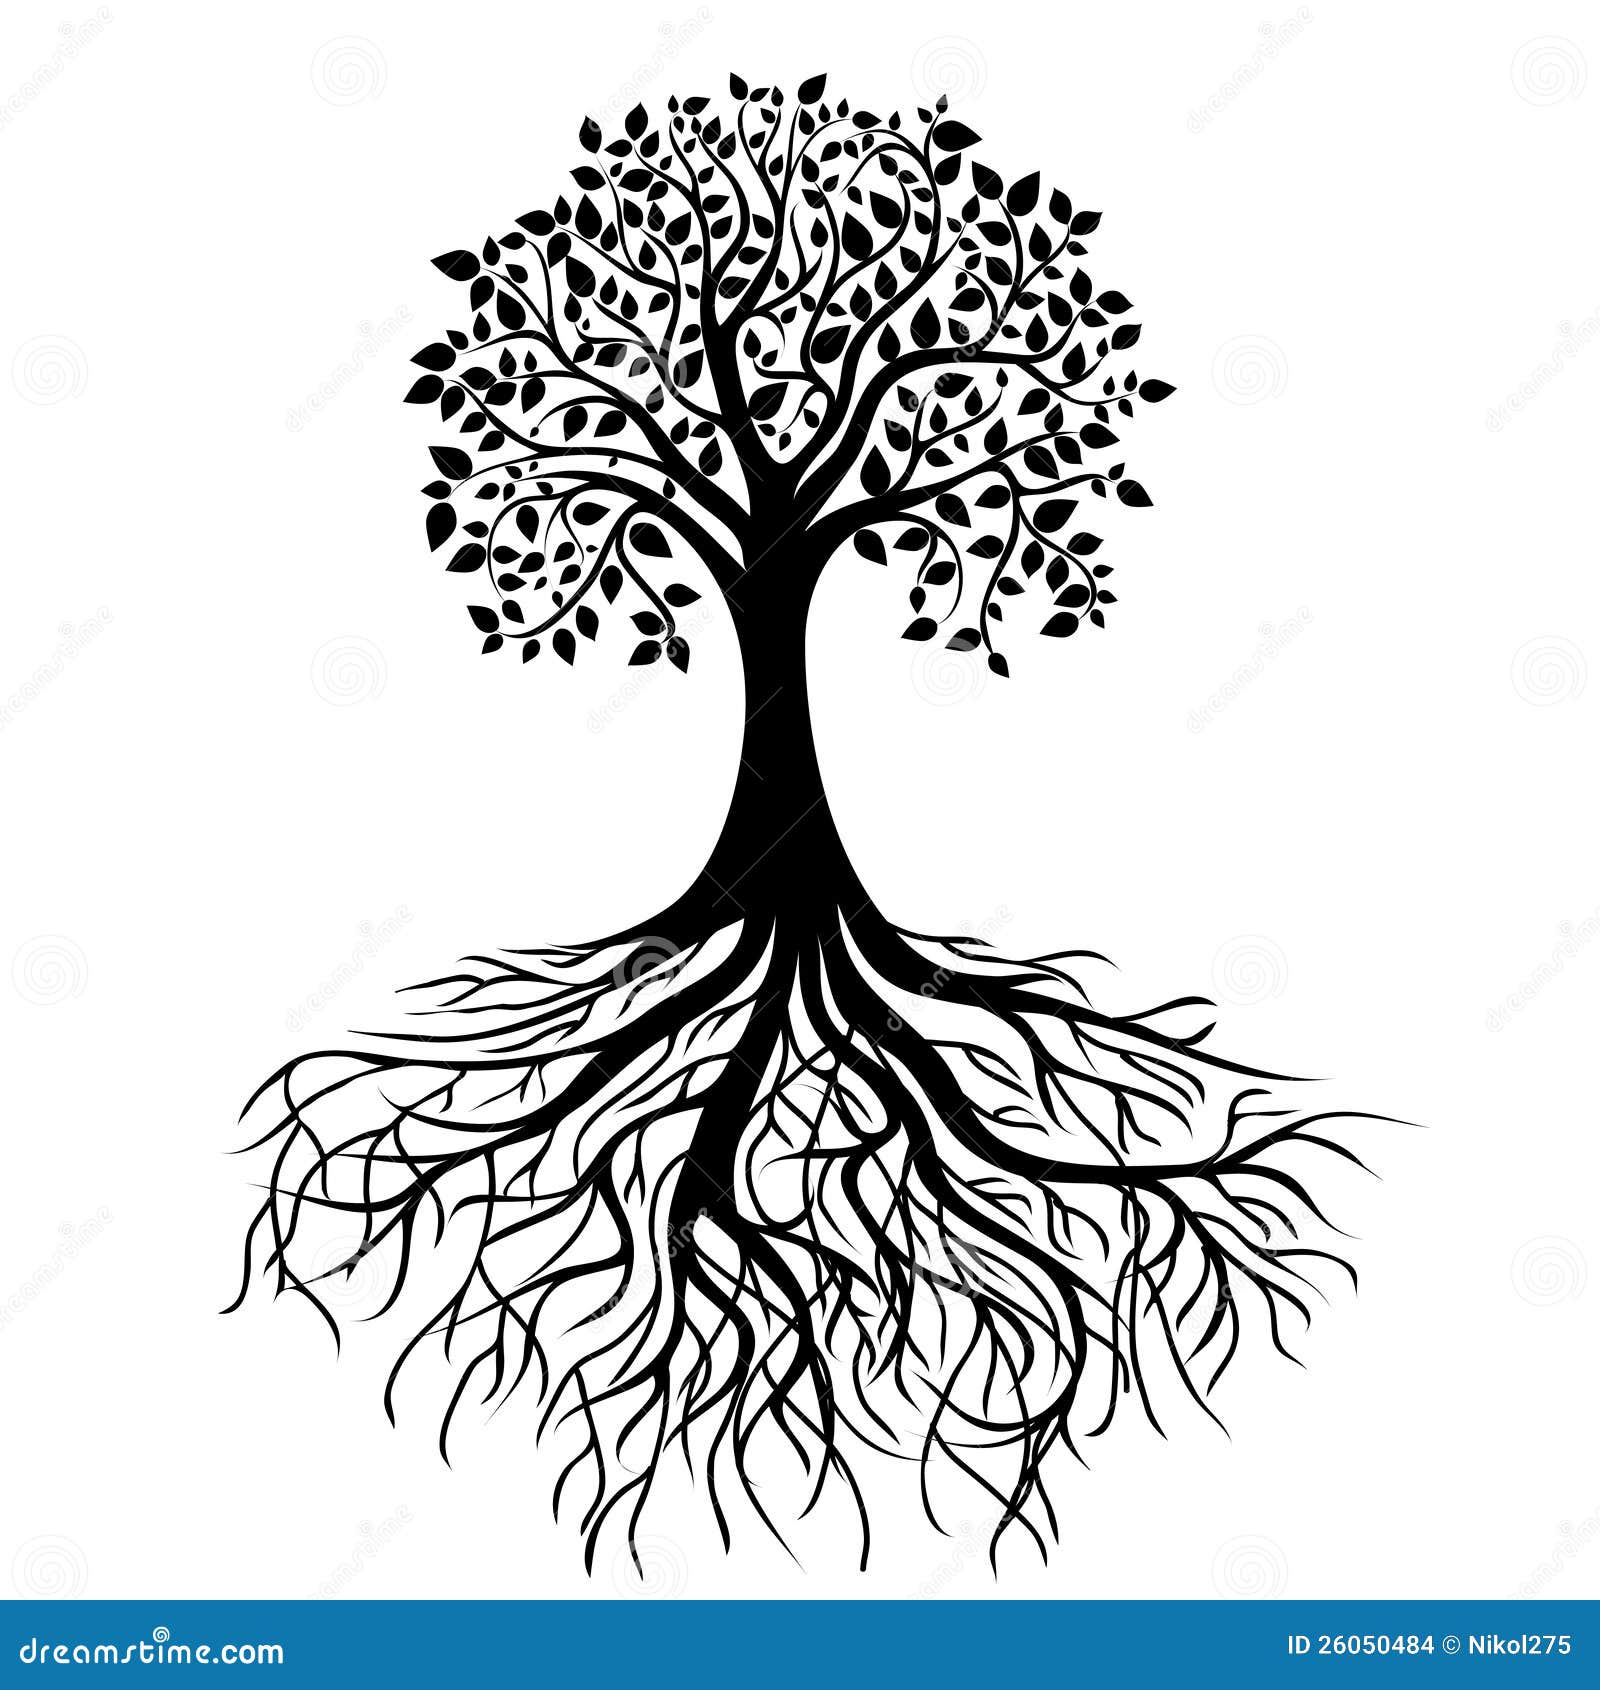 tree-roots-26050484.jpg